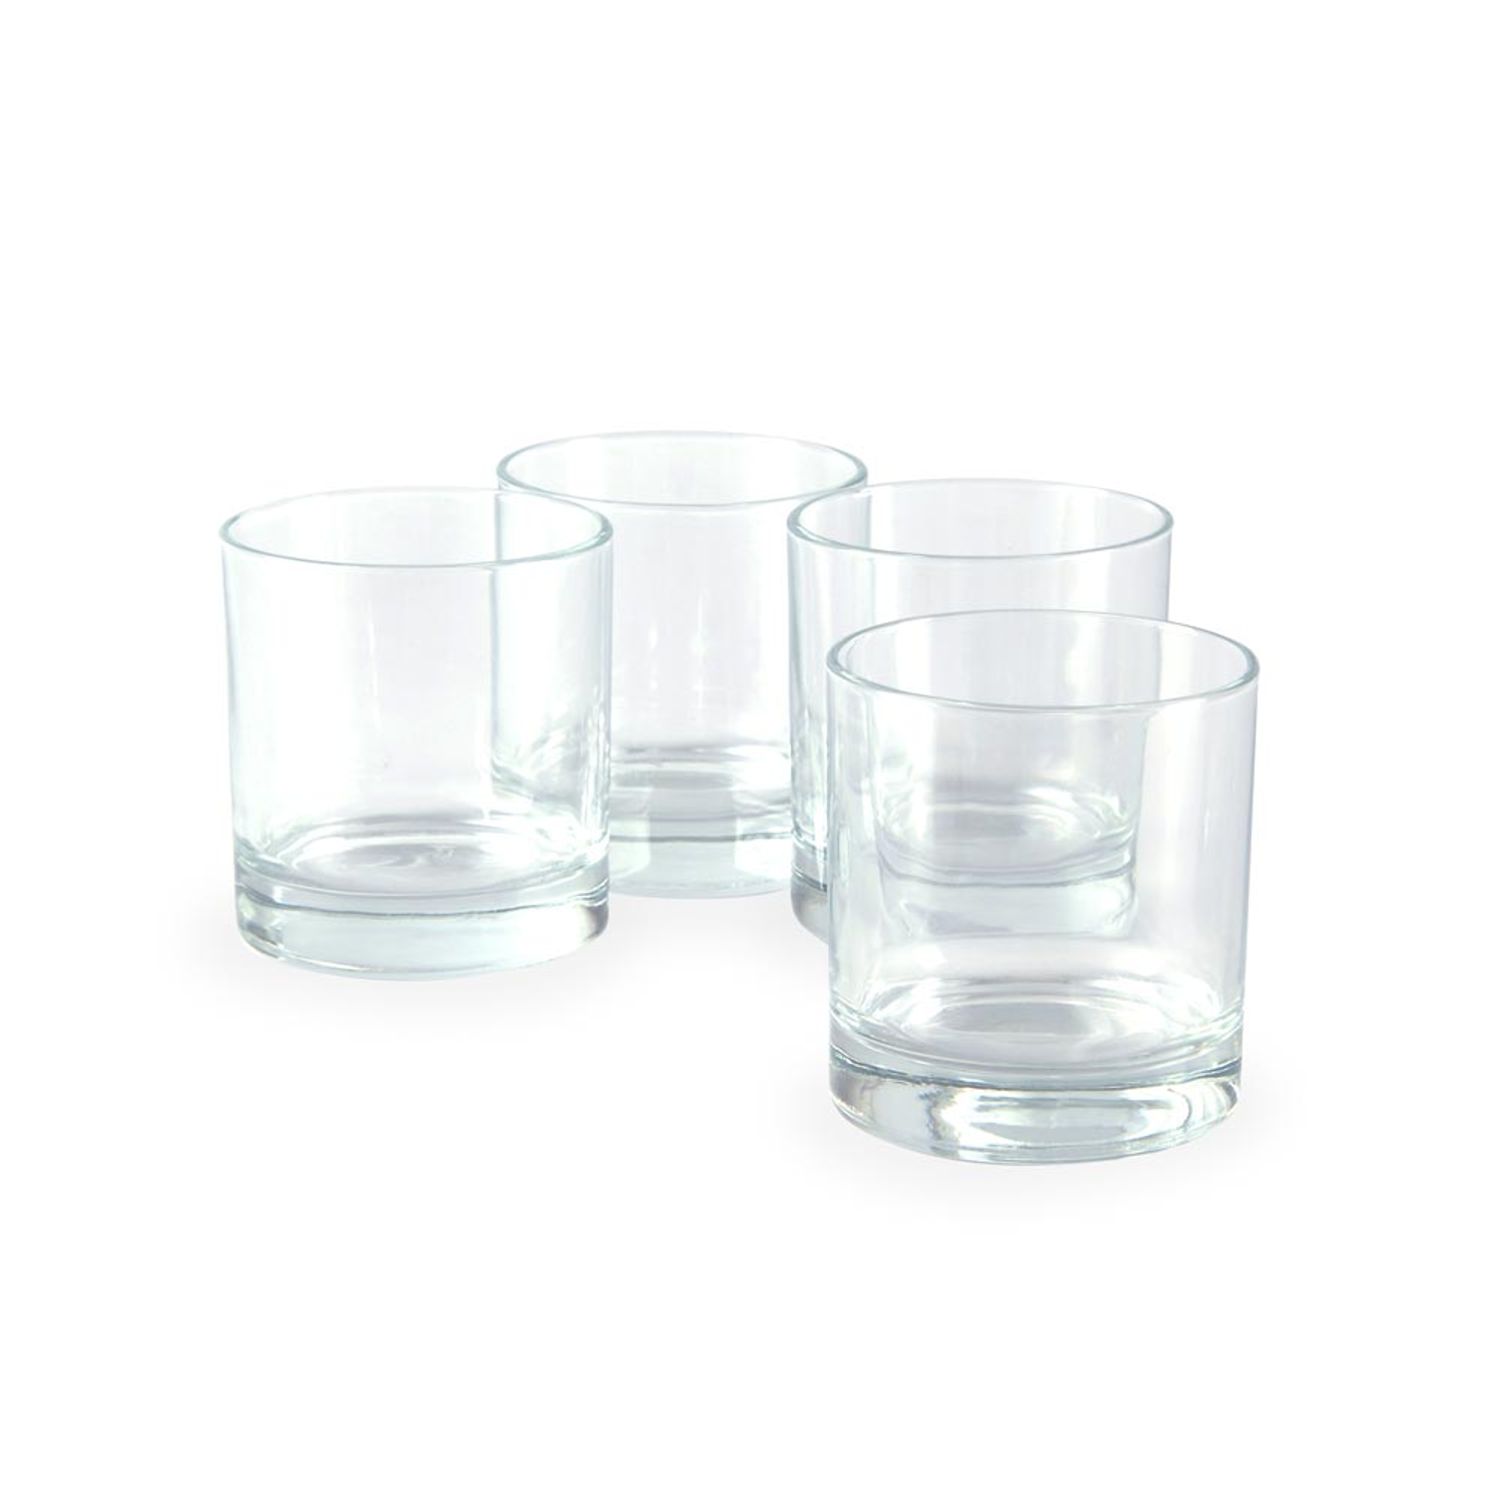 Set de vasos de vidrio x 4 unidades